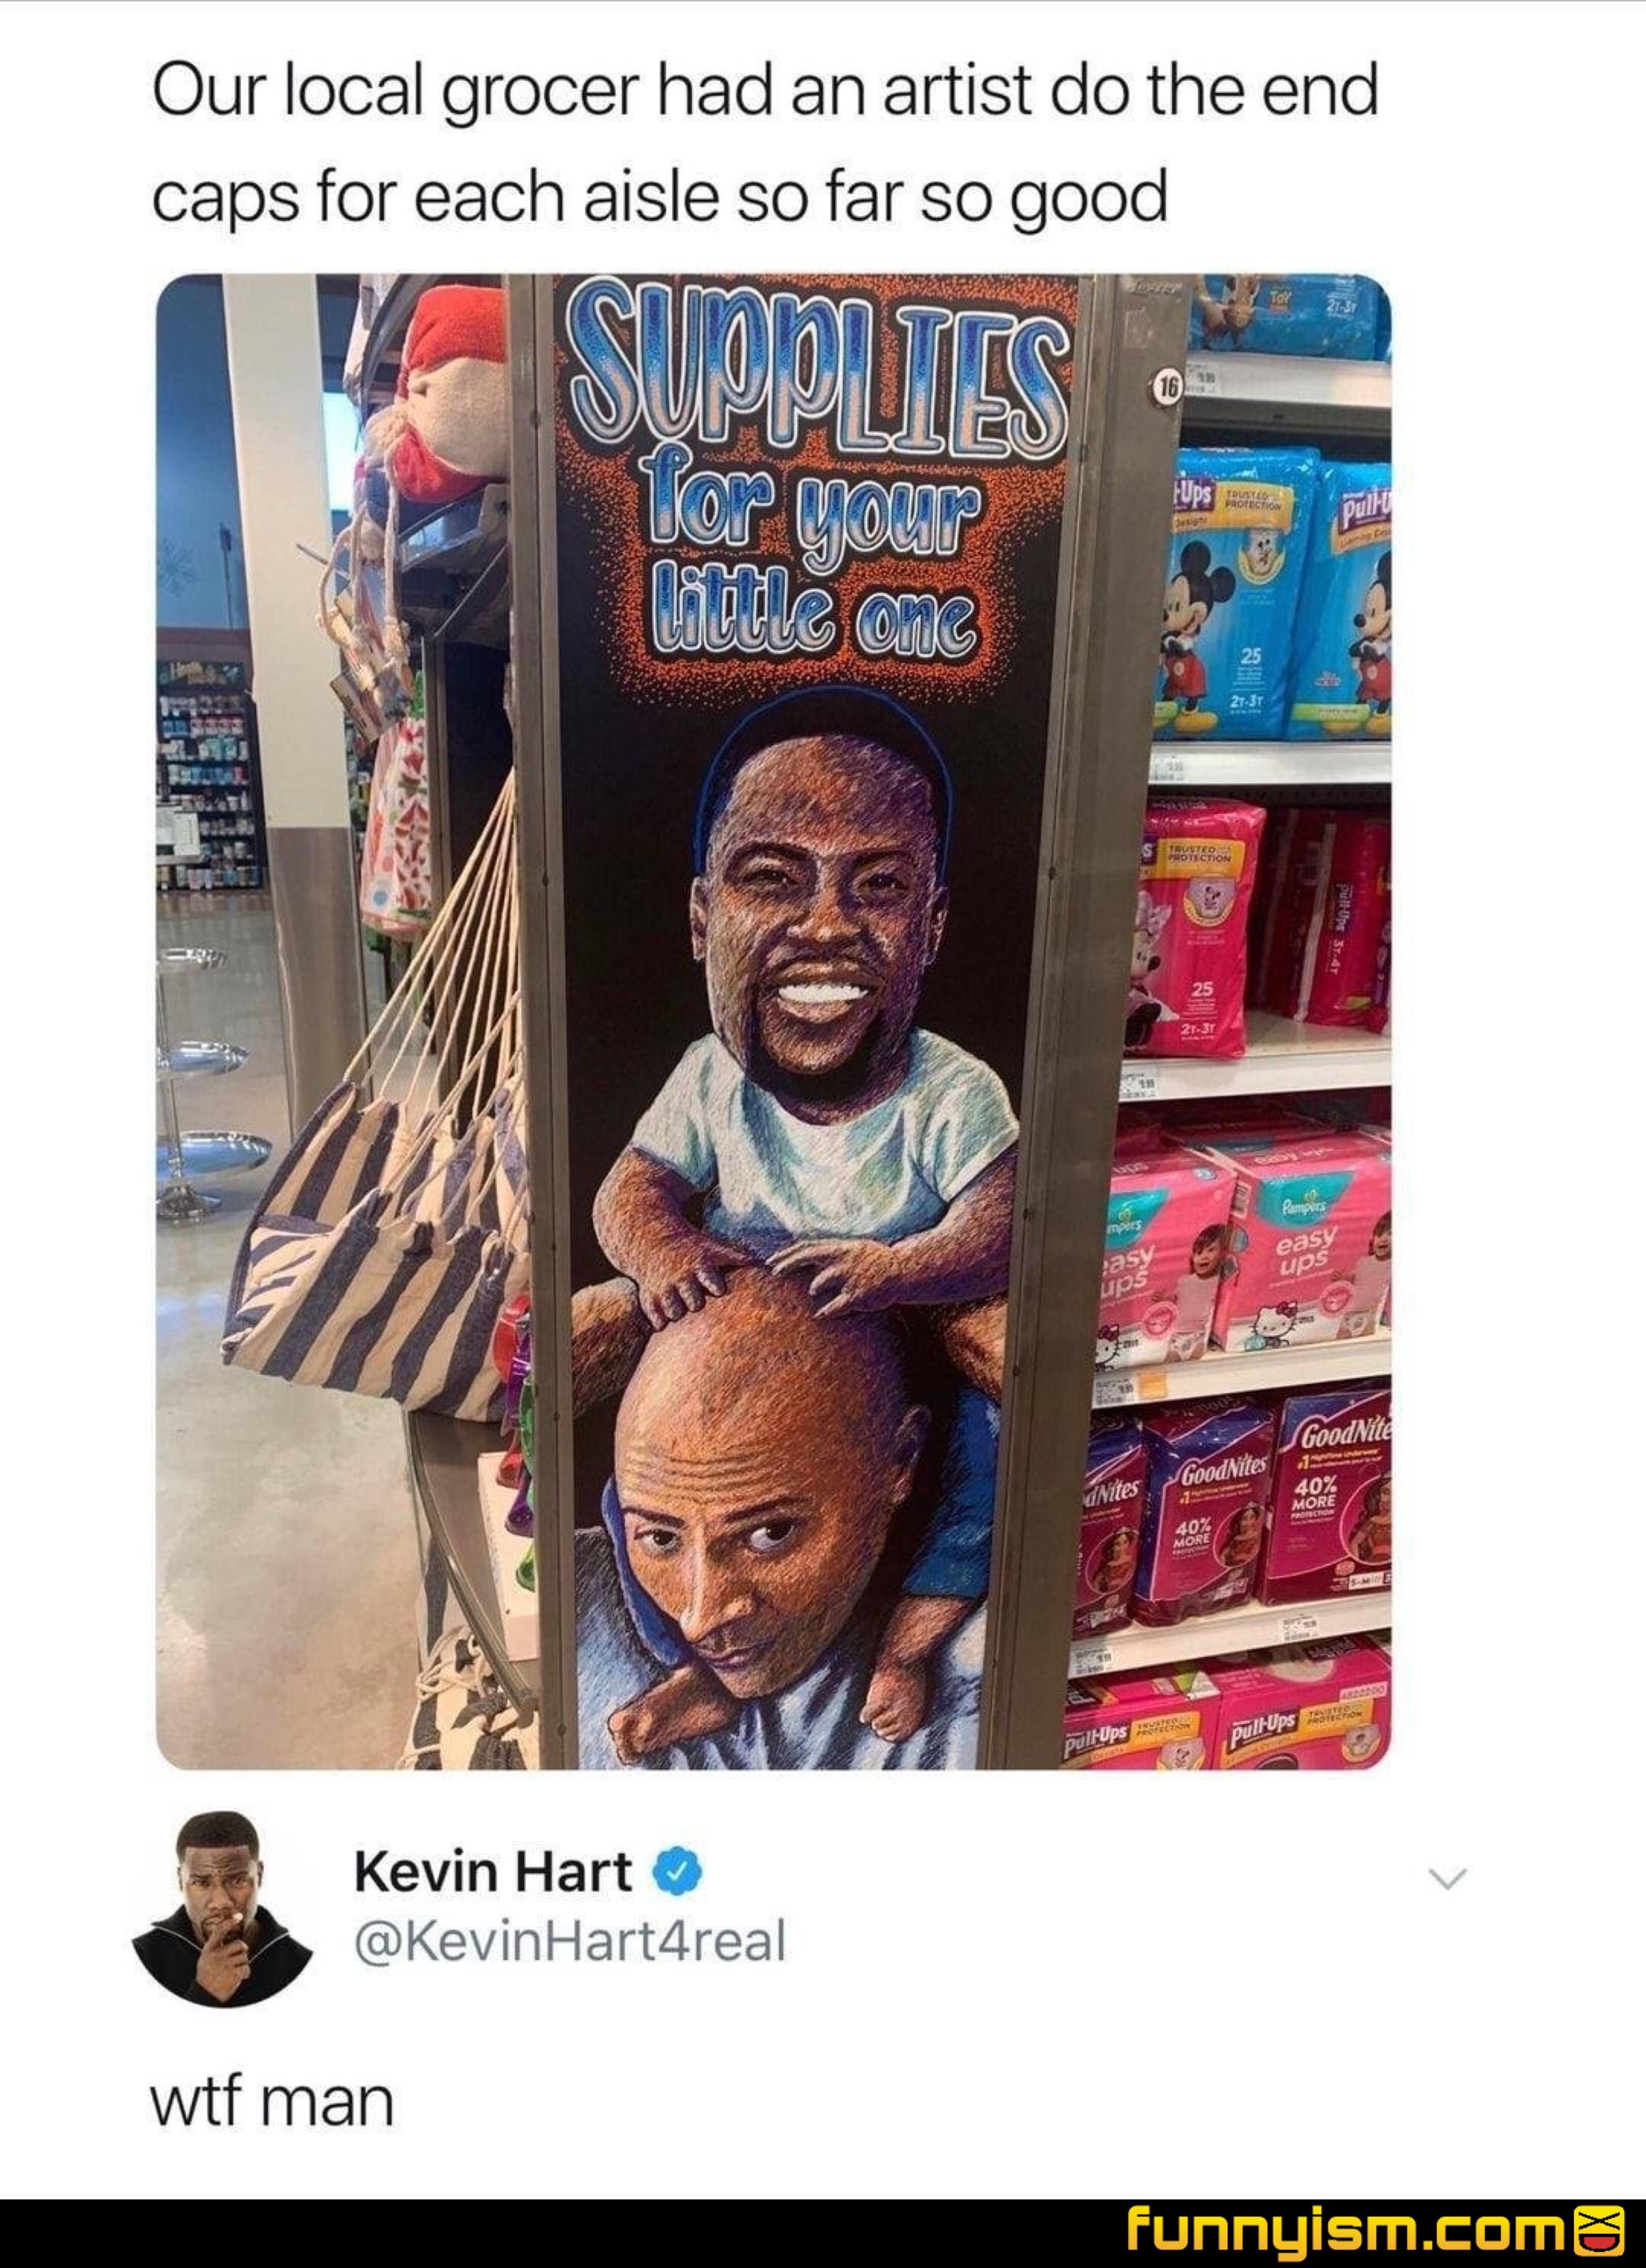 Poor Kevin Hart